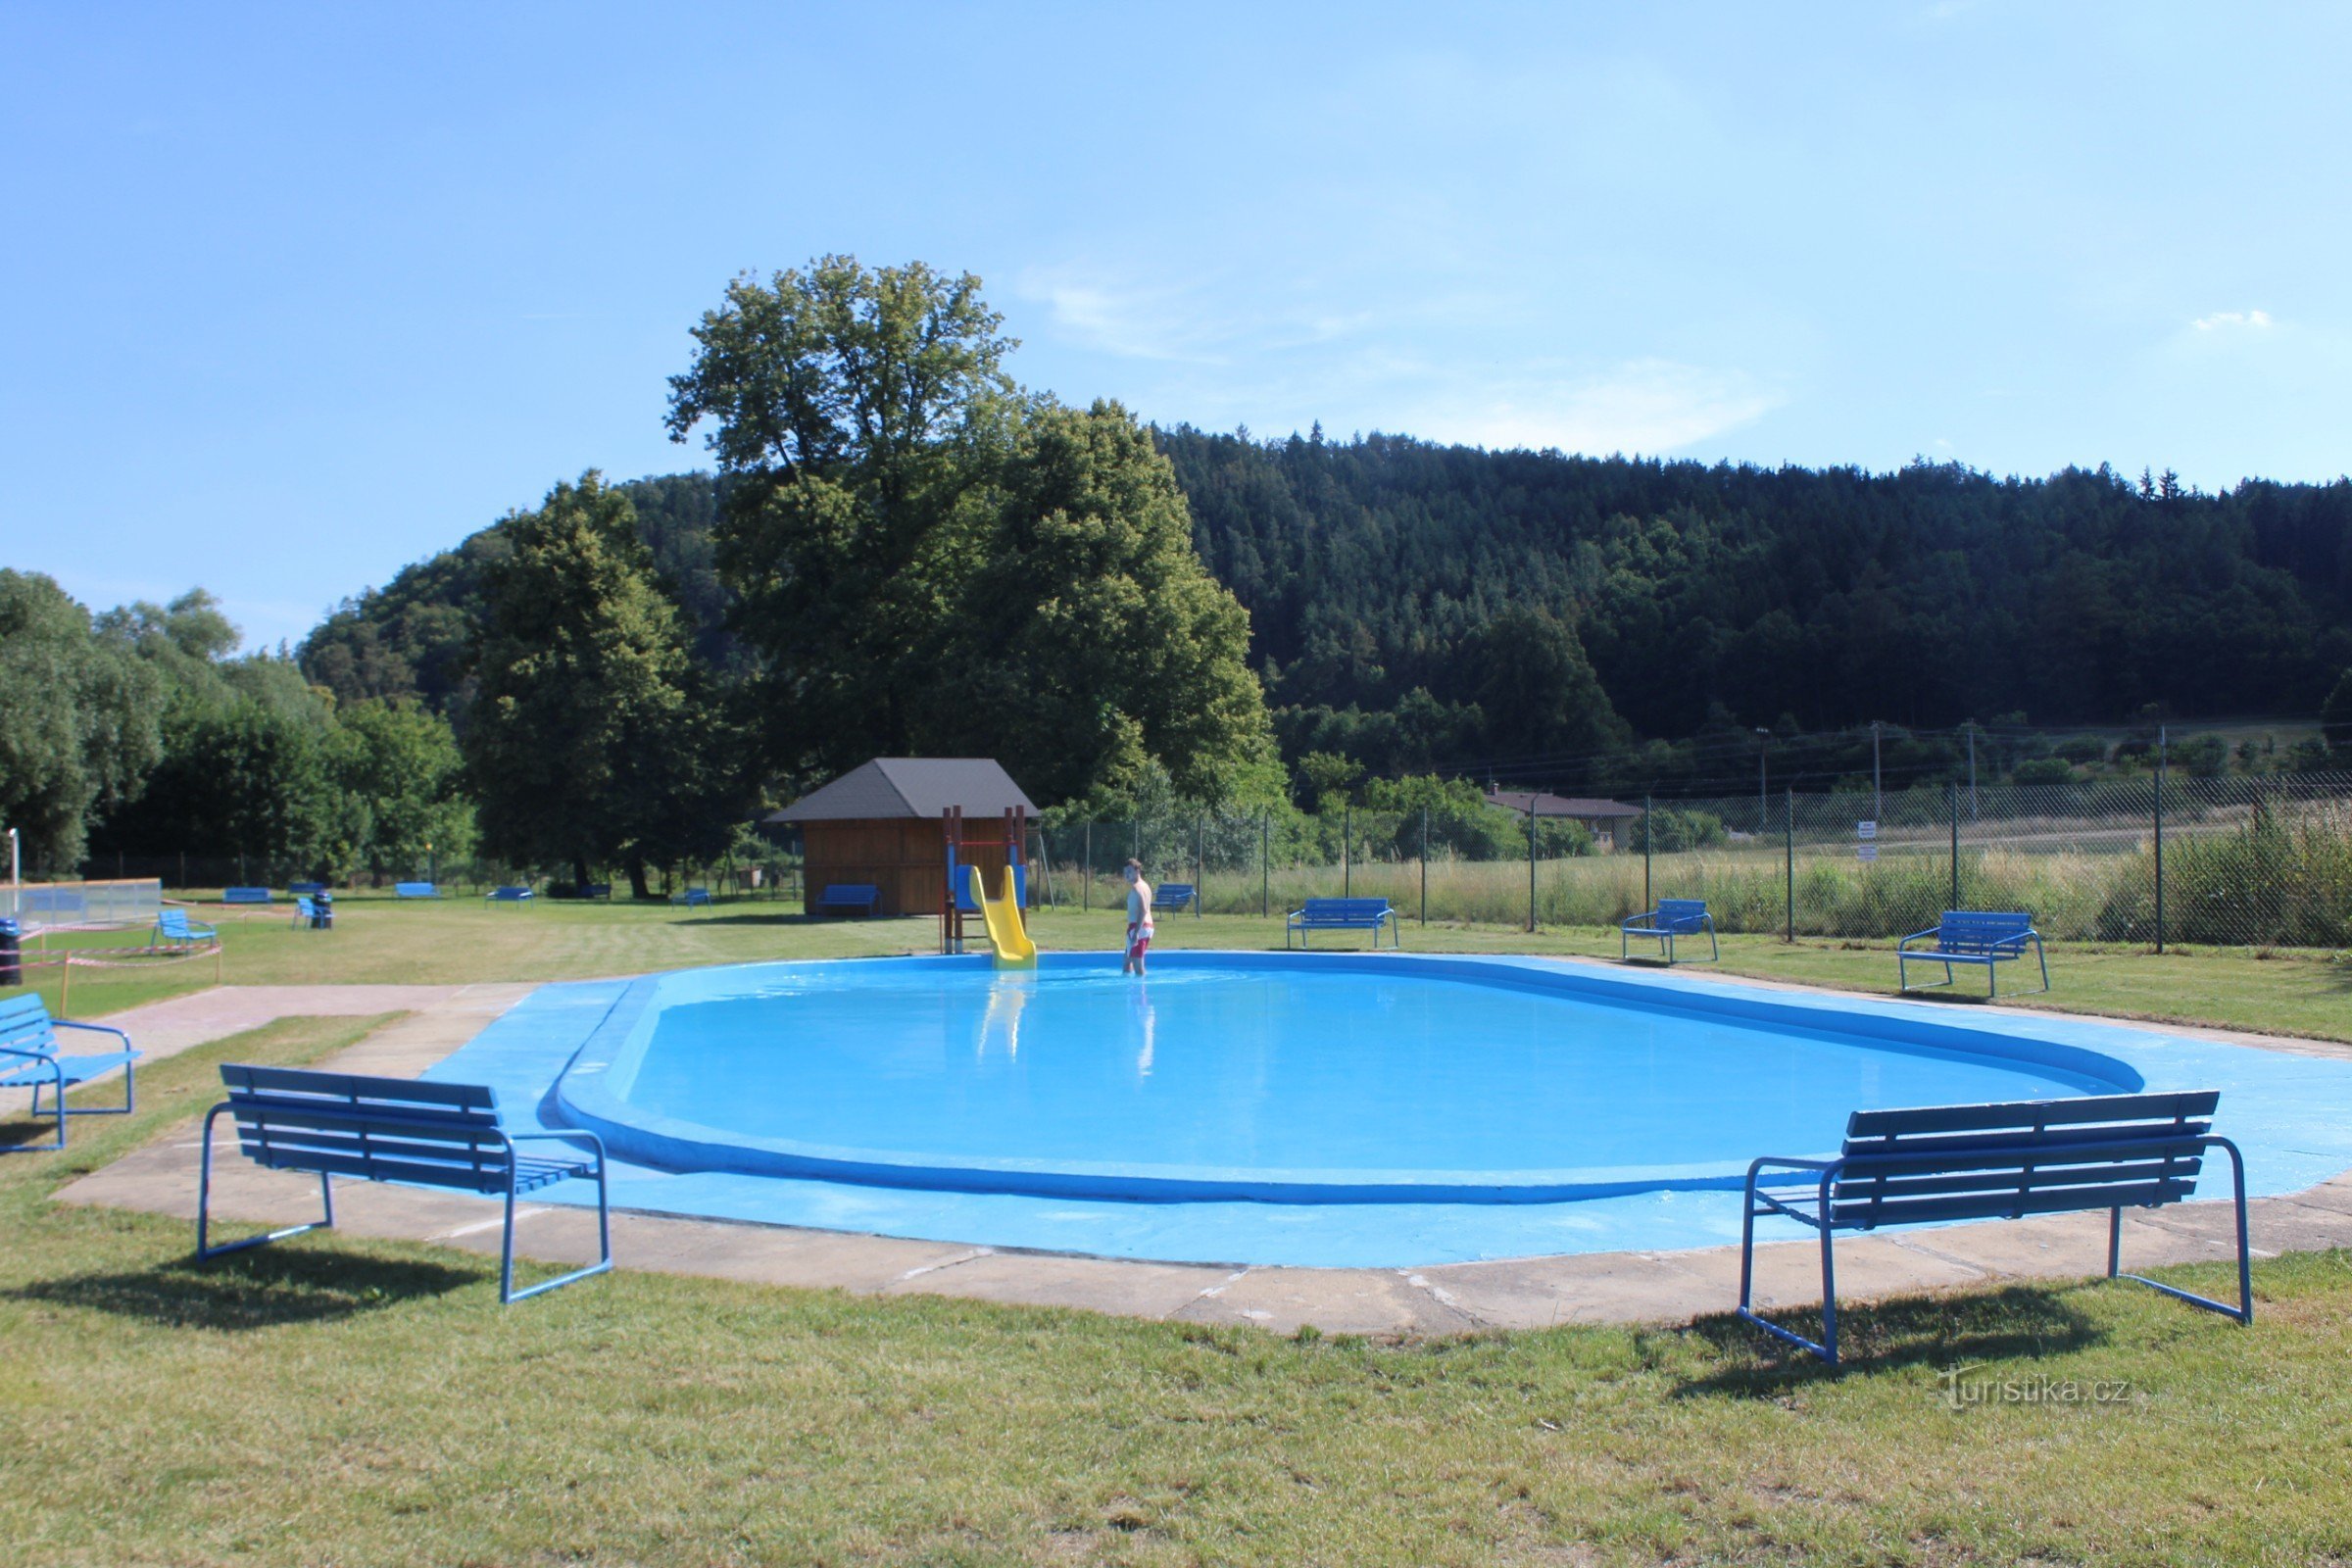 Bể bơi Tišnovské - bể bơi trẻ em 2014